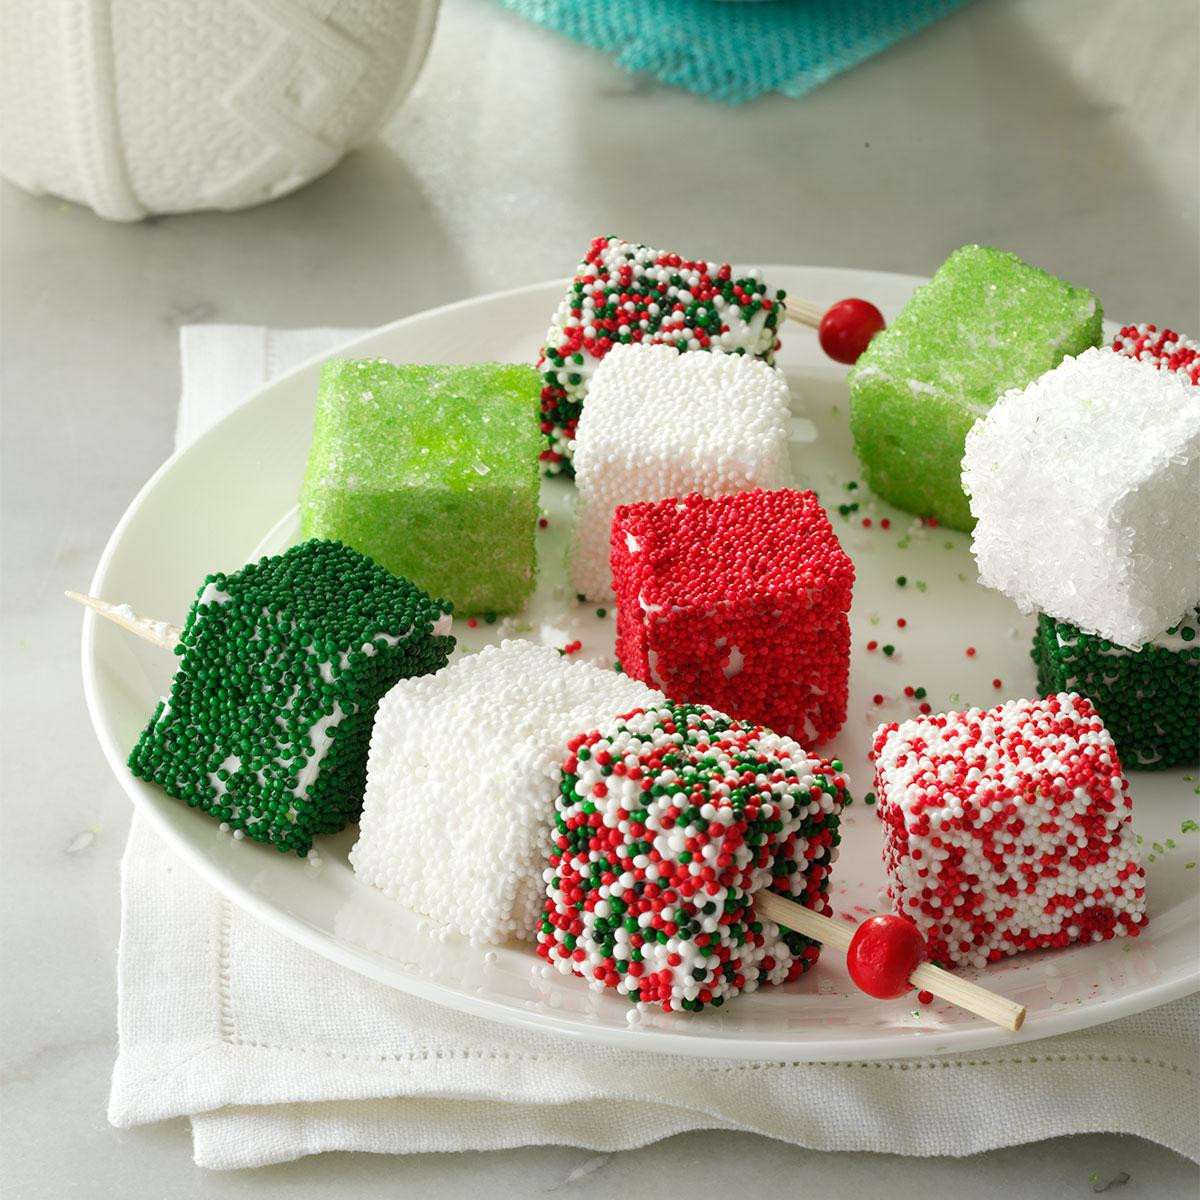 Candy Recipes For Christmas
 Homemade Holiday Marshmallows Recipe